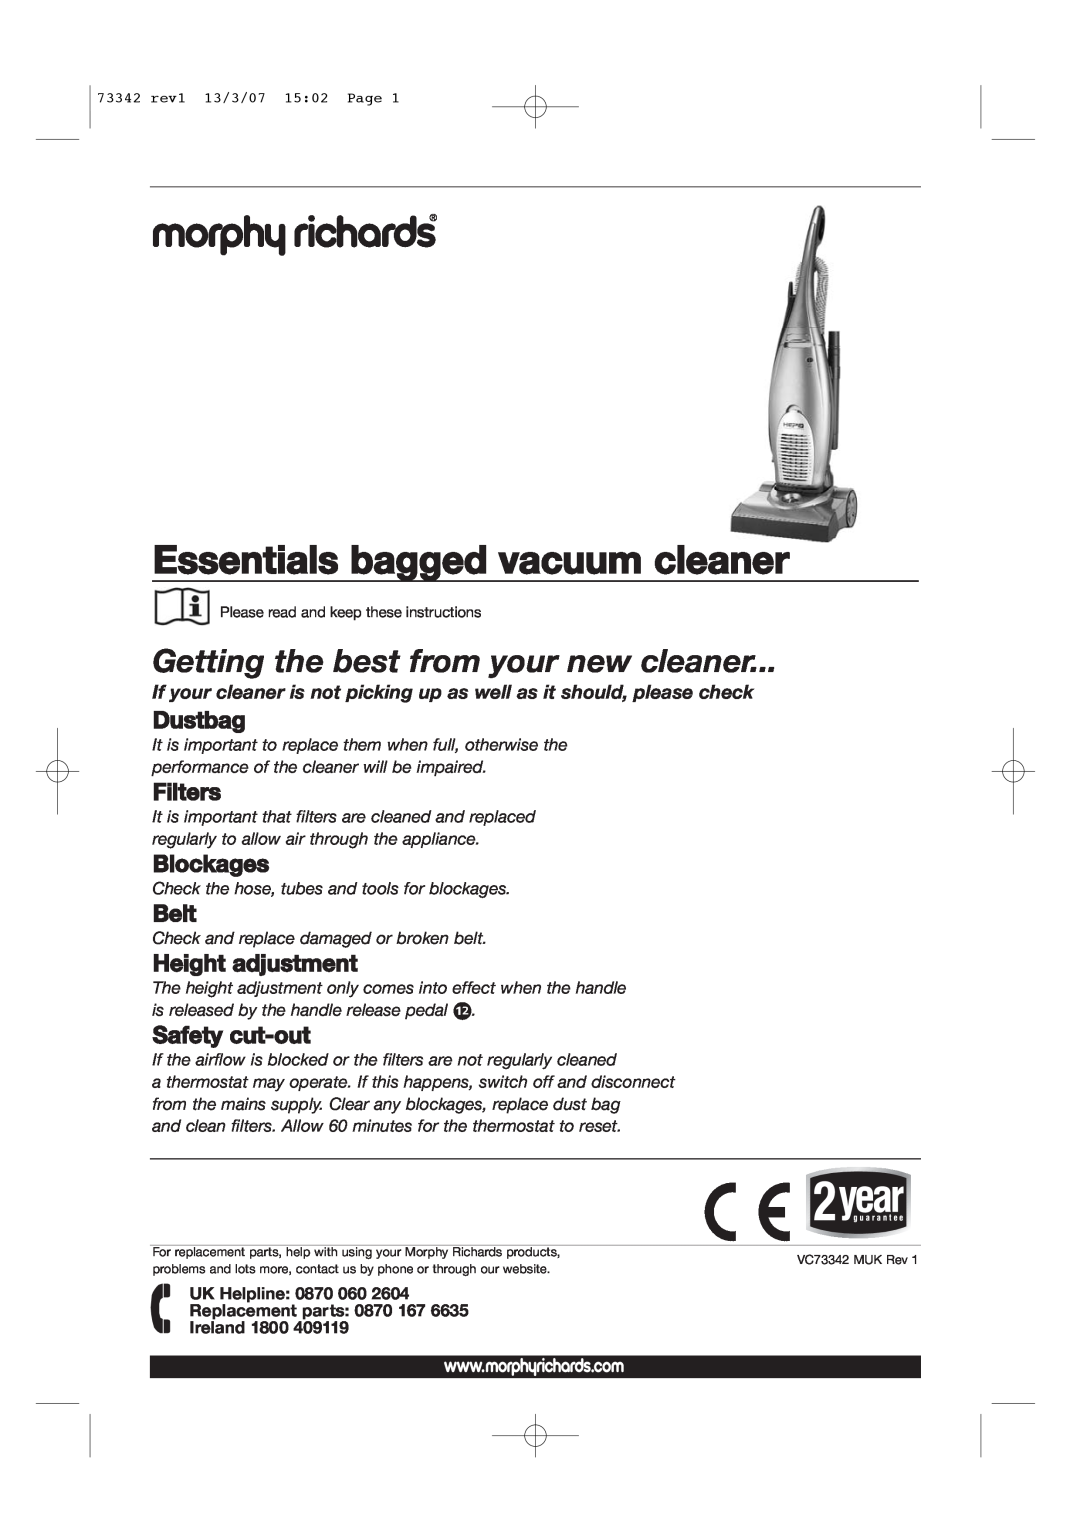 Morphy Richards Essentials Bag Vacuum Cleaner manual Essentials bagged vacuum cleaner, Dustbag, Filters, Blockages, Belt 